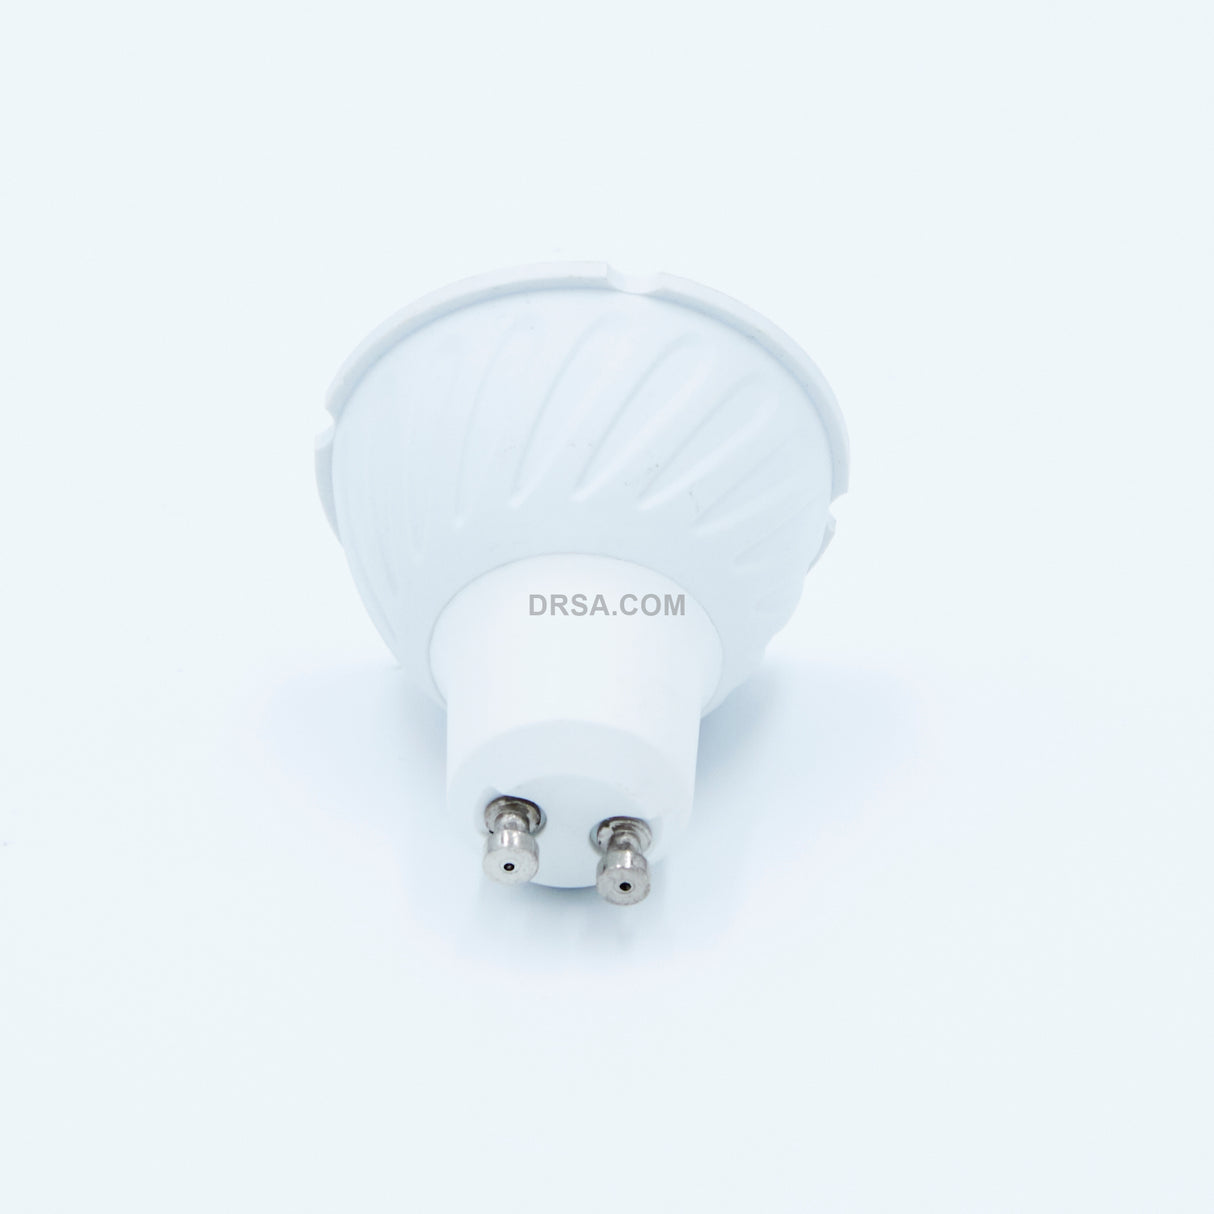 DRSA - Light it up